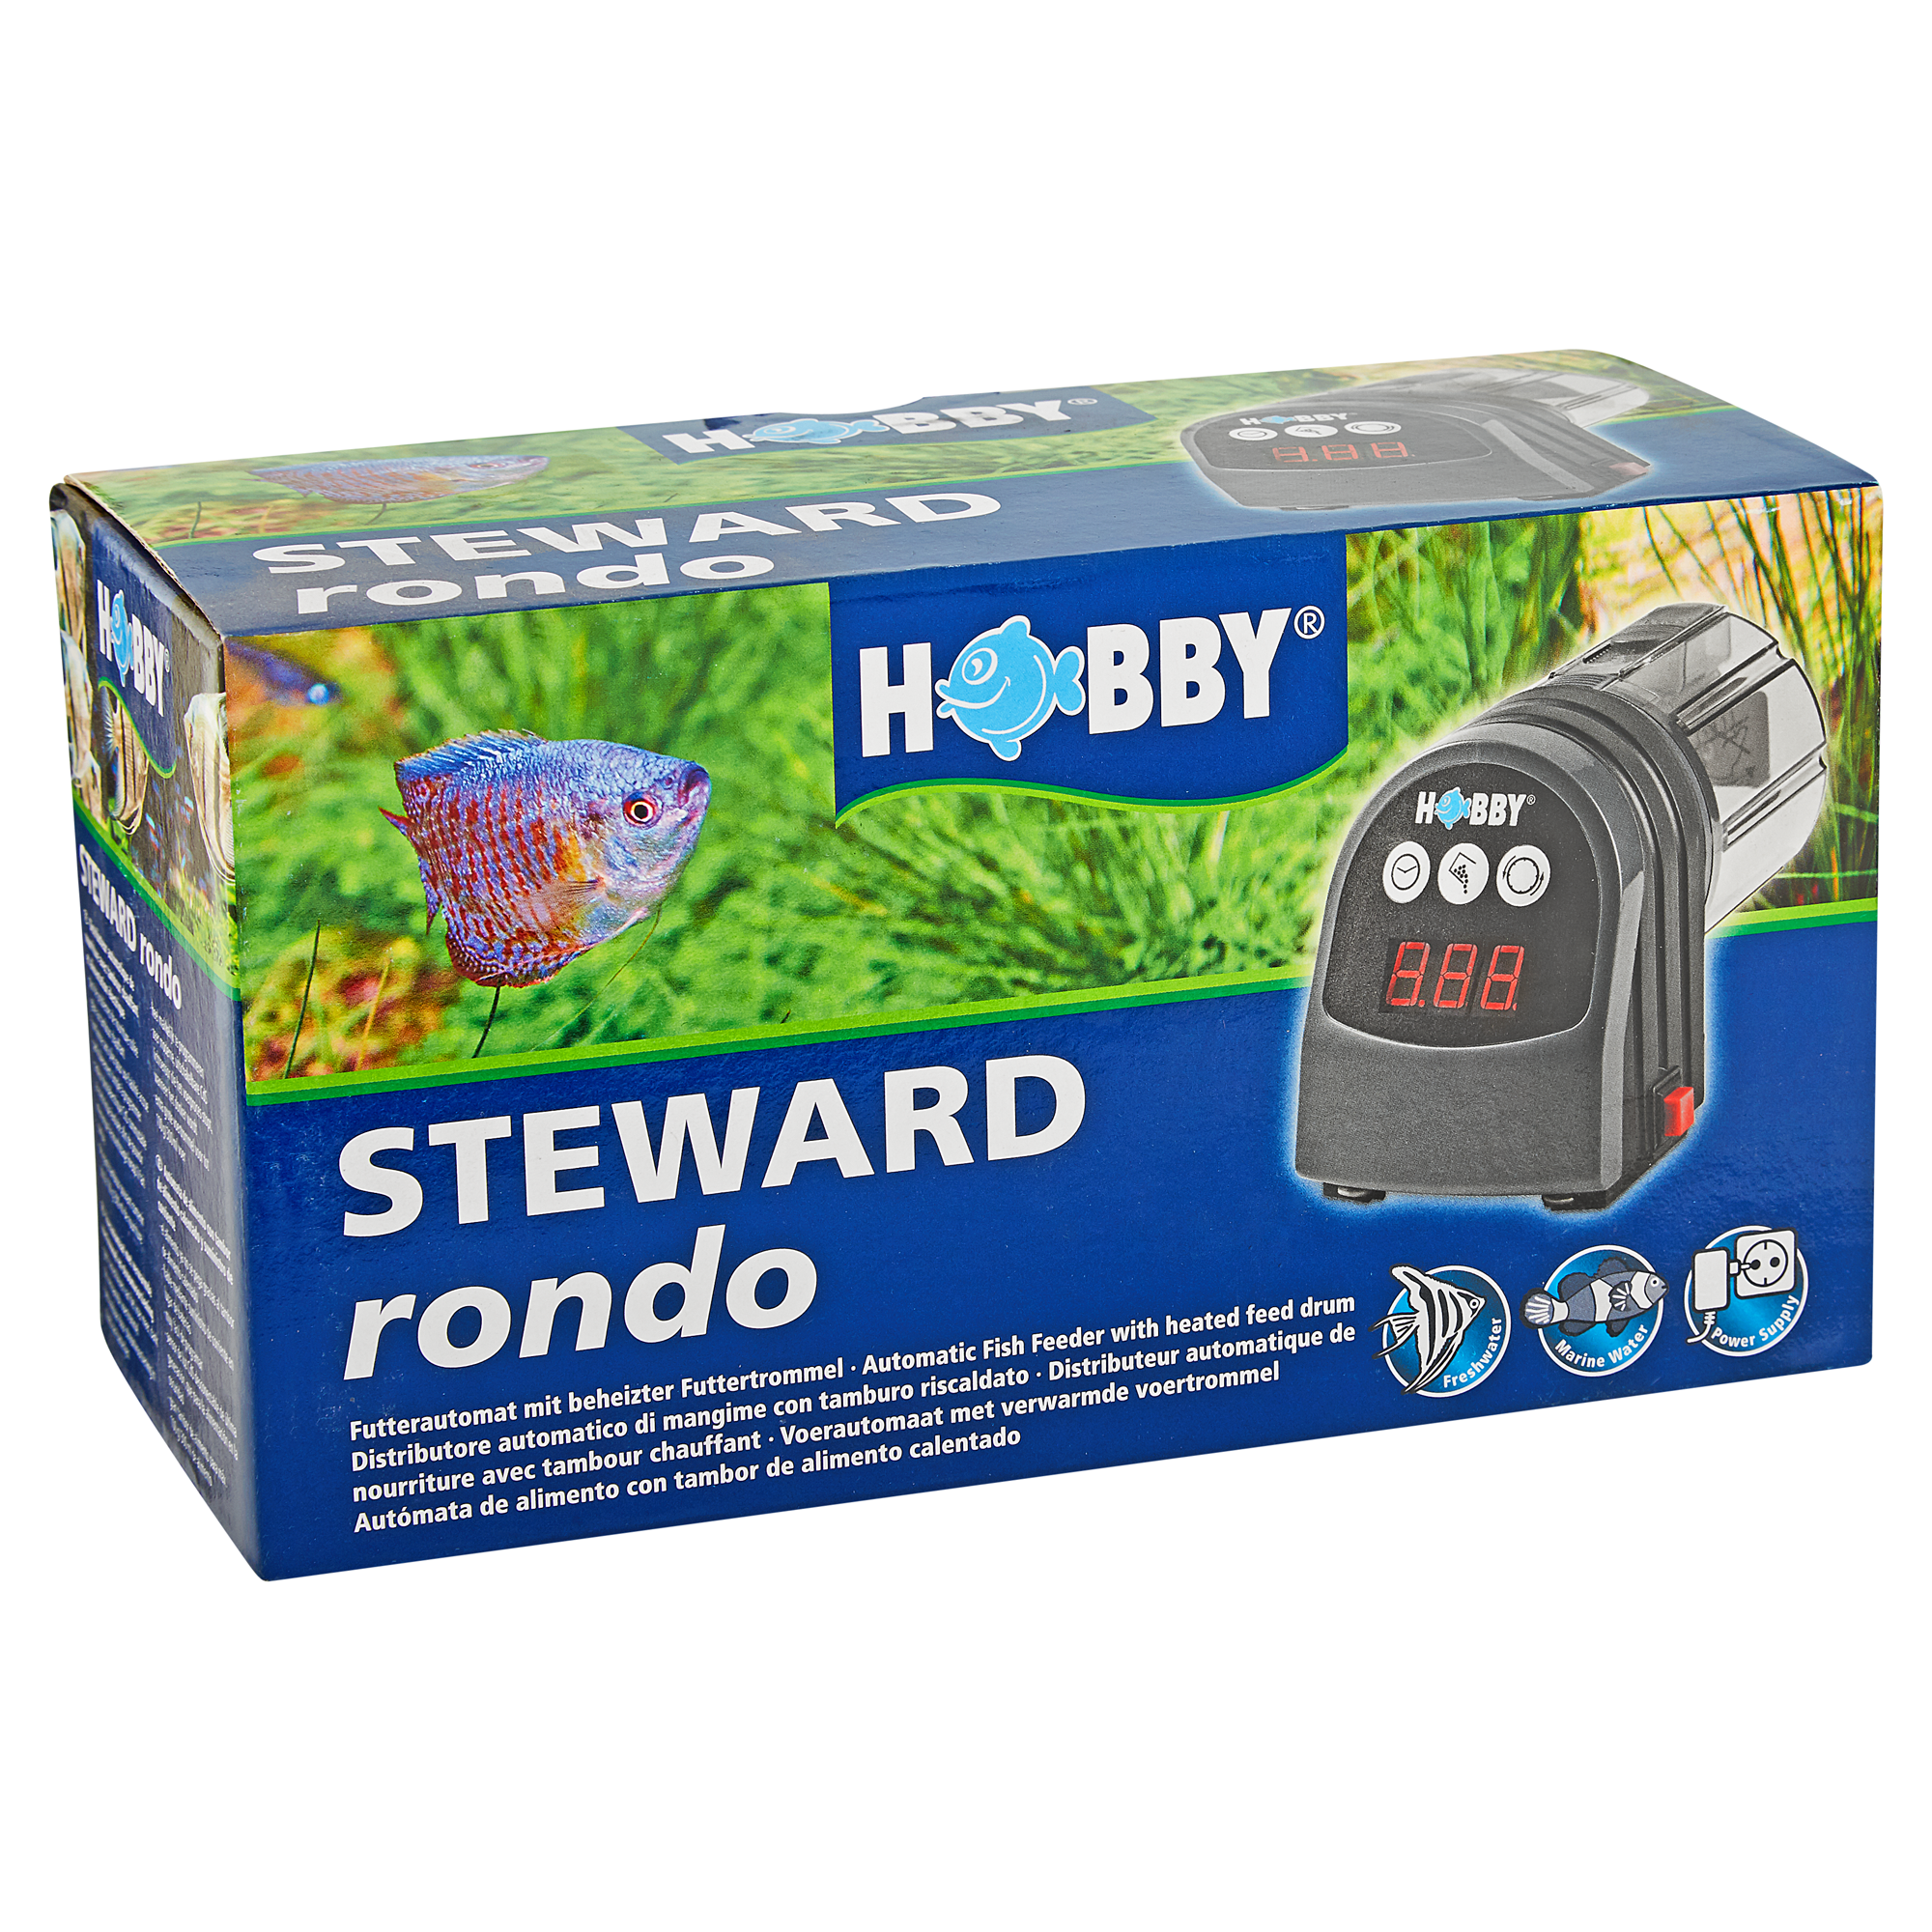 Futterautomat "Steward rondo" beheizt 100 g/300 ml + product picture